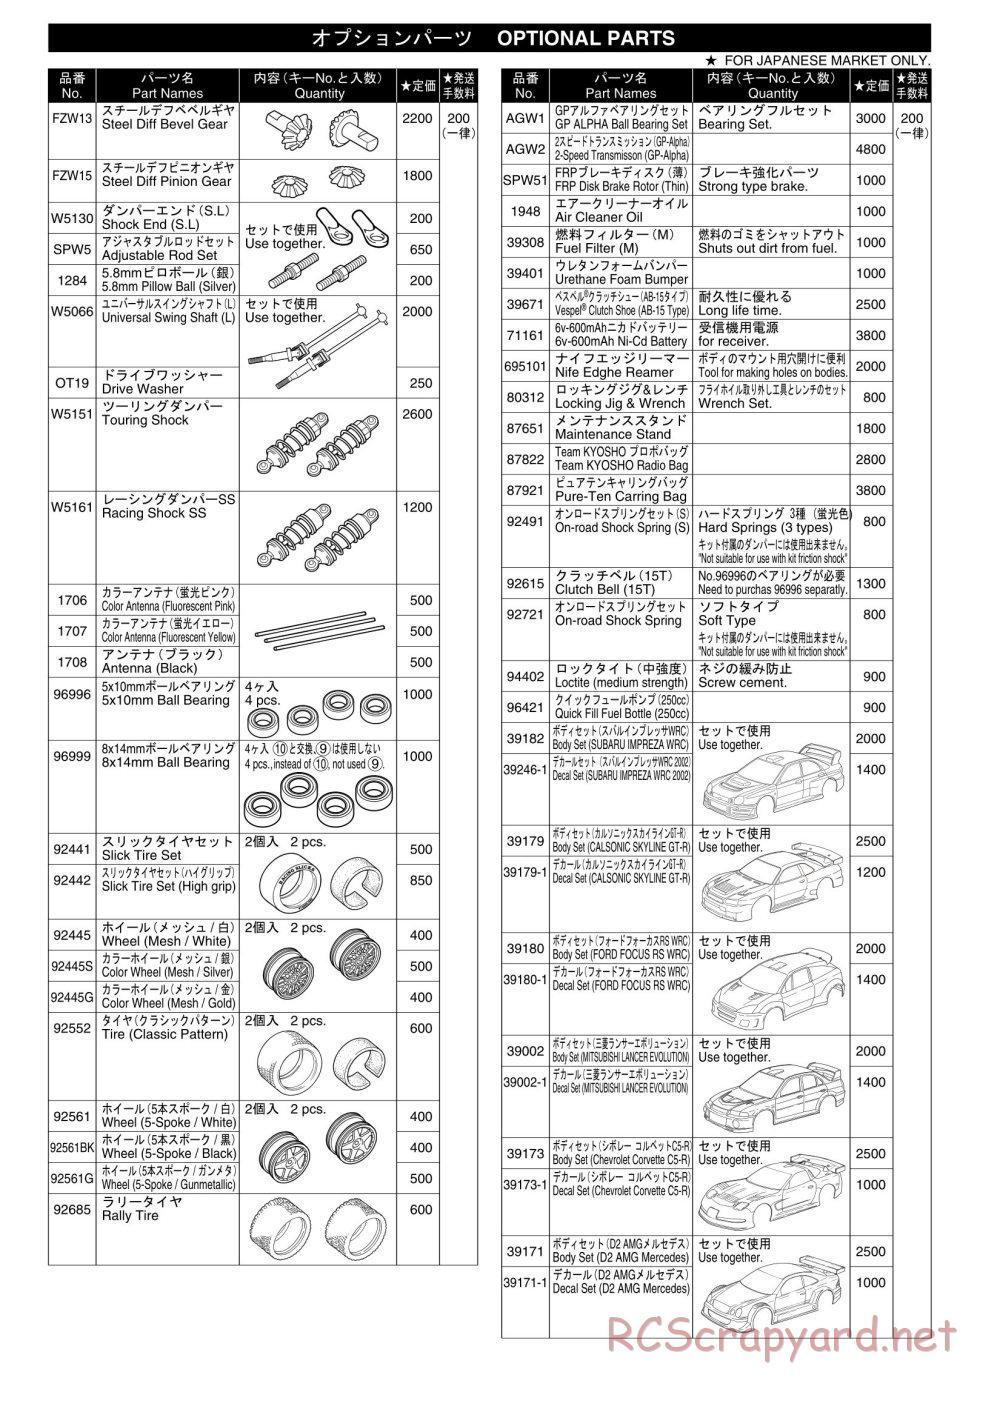 Kyosho - PureTen GP Alpha 2 - Parts List - Page 2